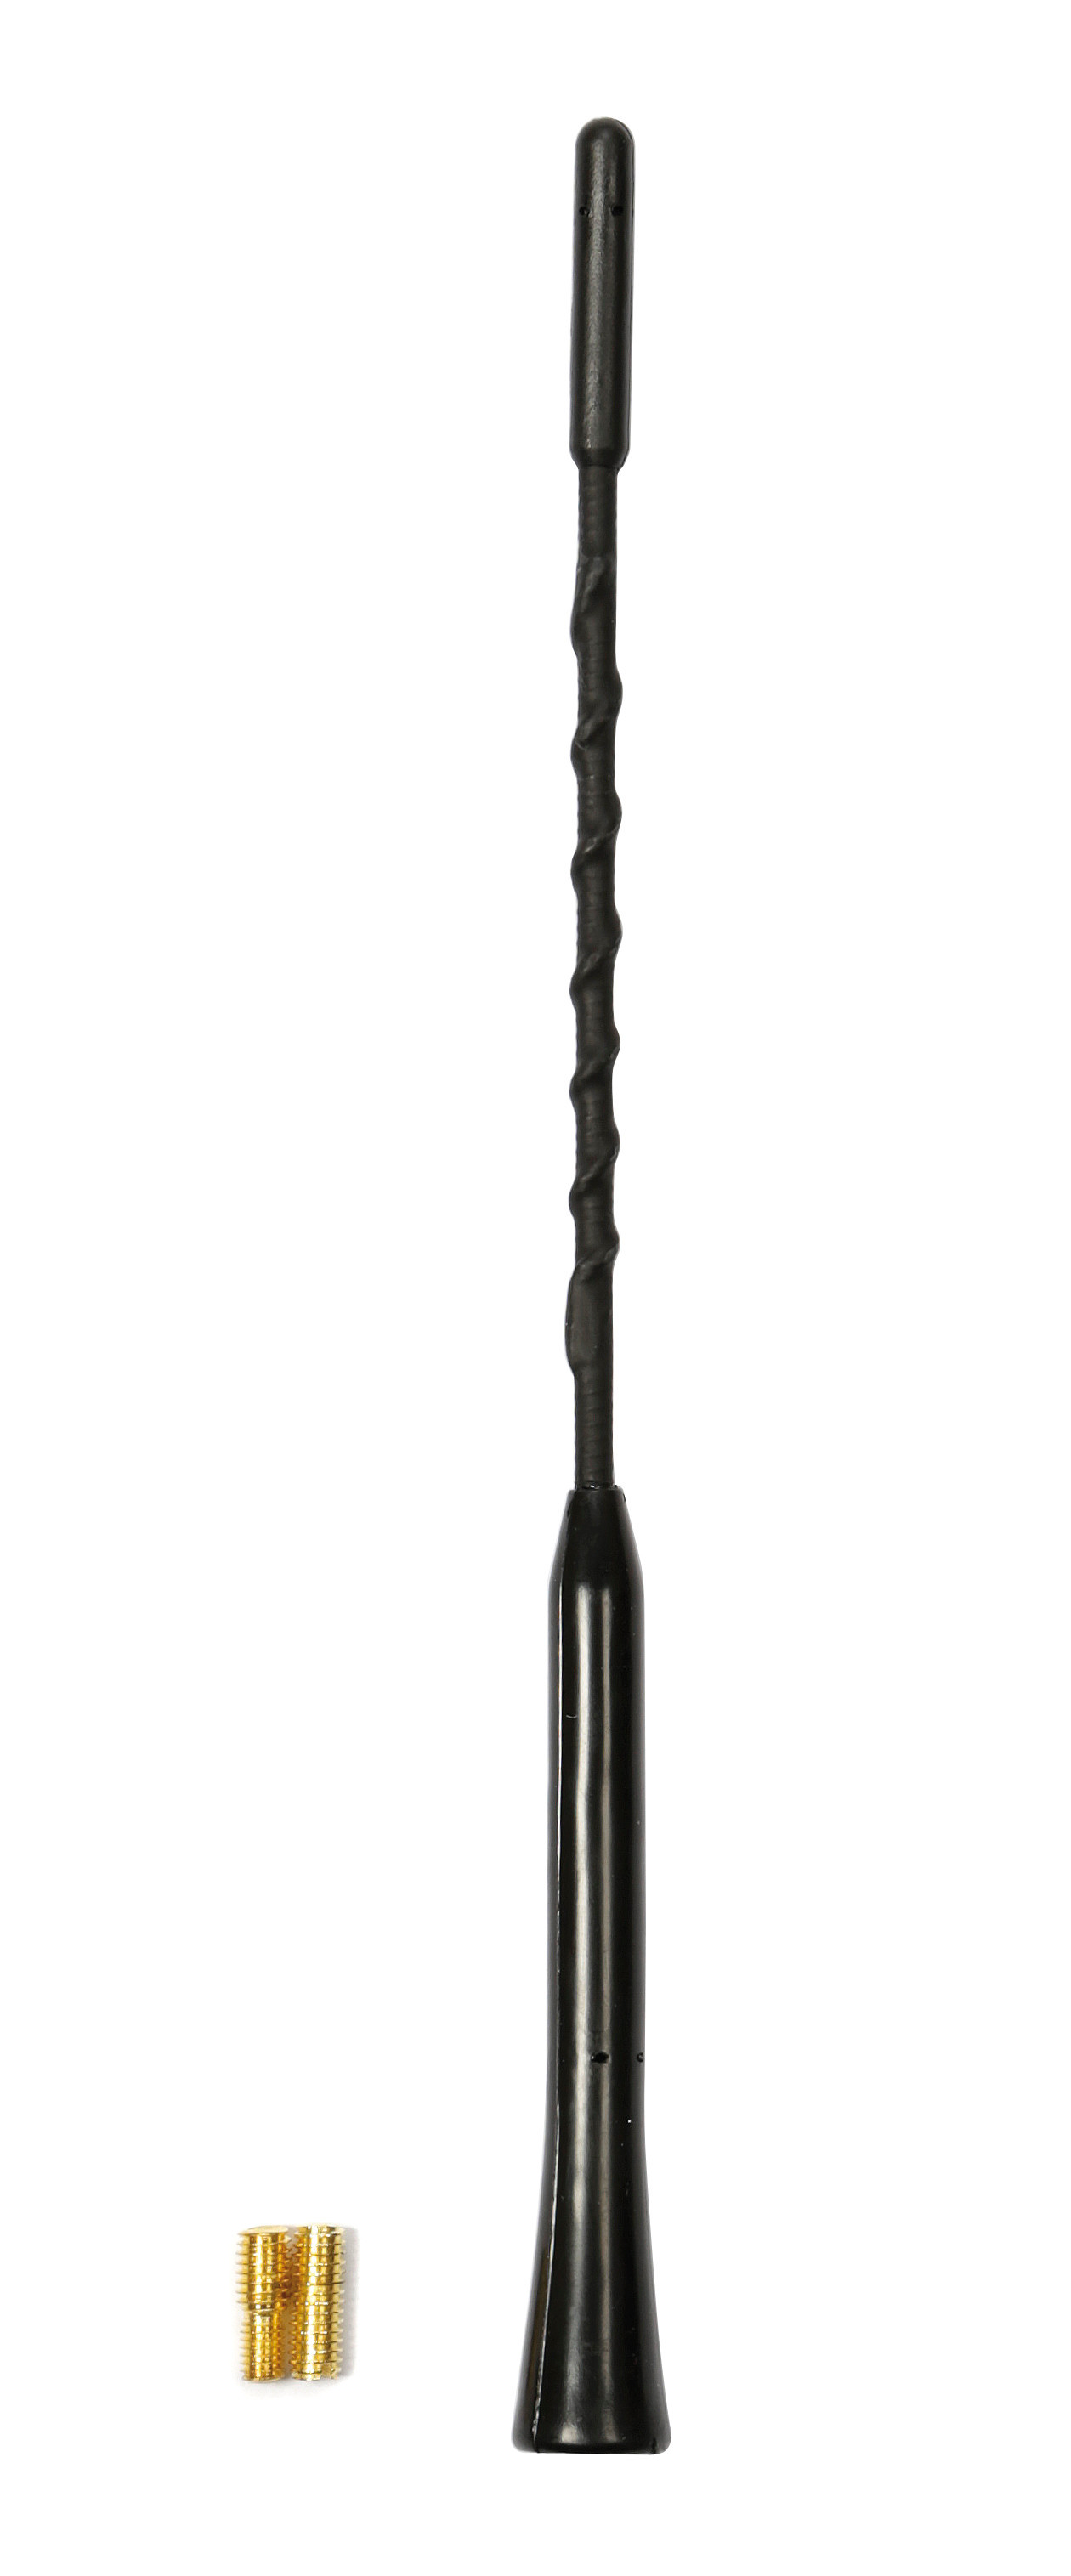 Vergea antena tip Golf (AM/FM) Lampa - 24cm - Ø 5-6mm thumb